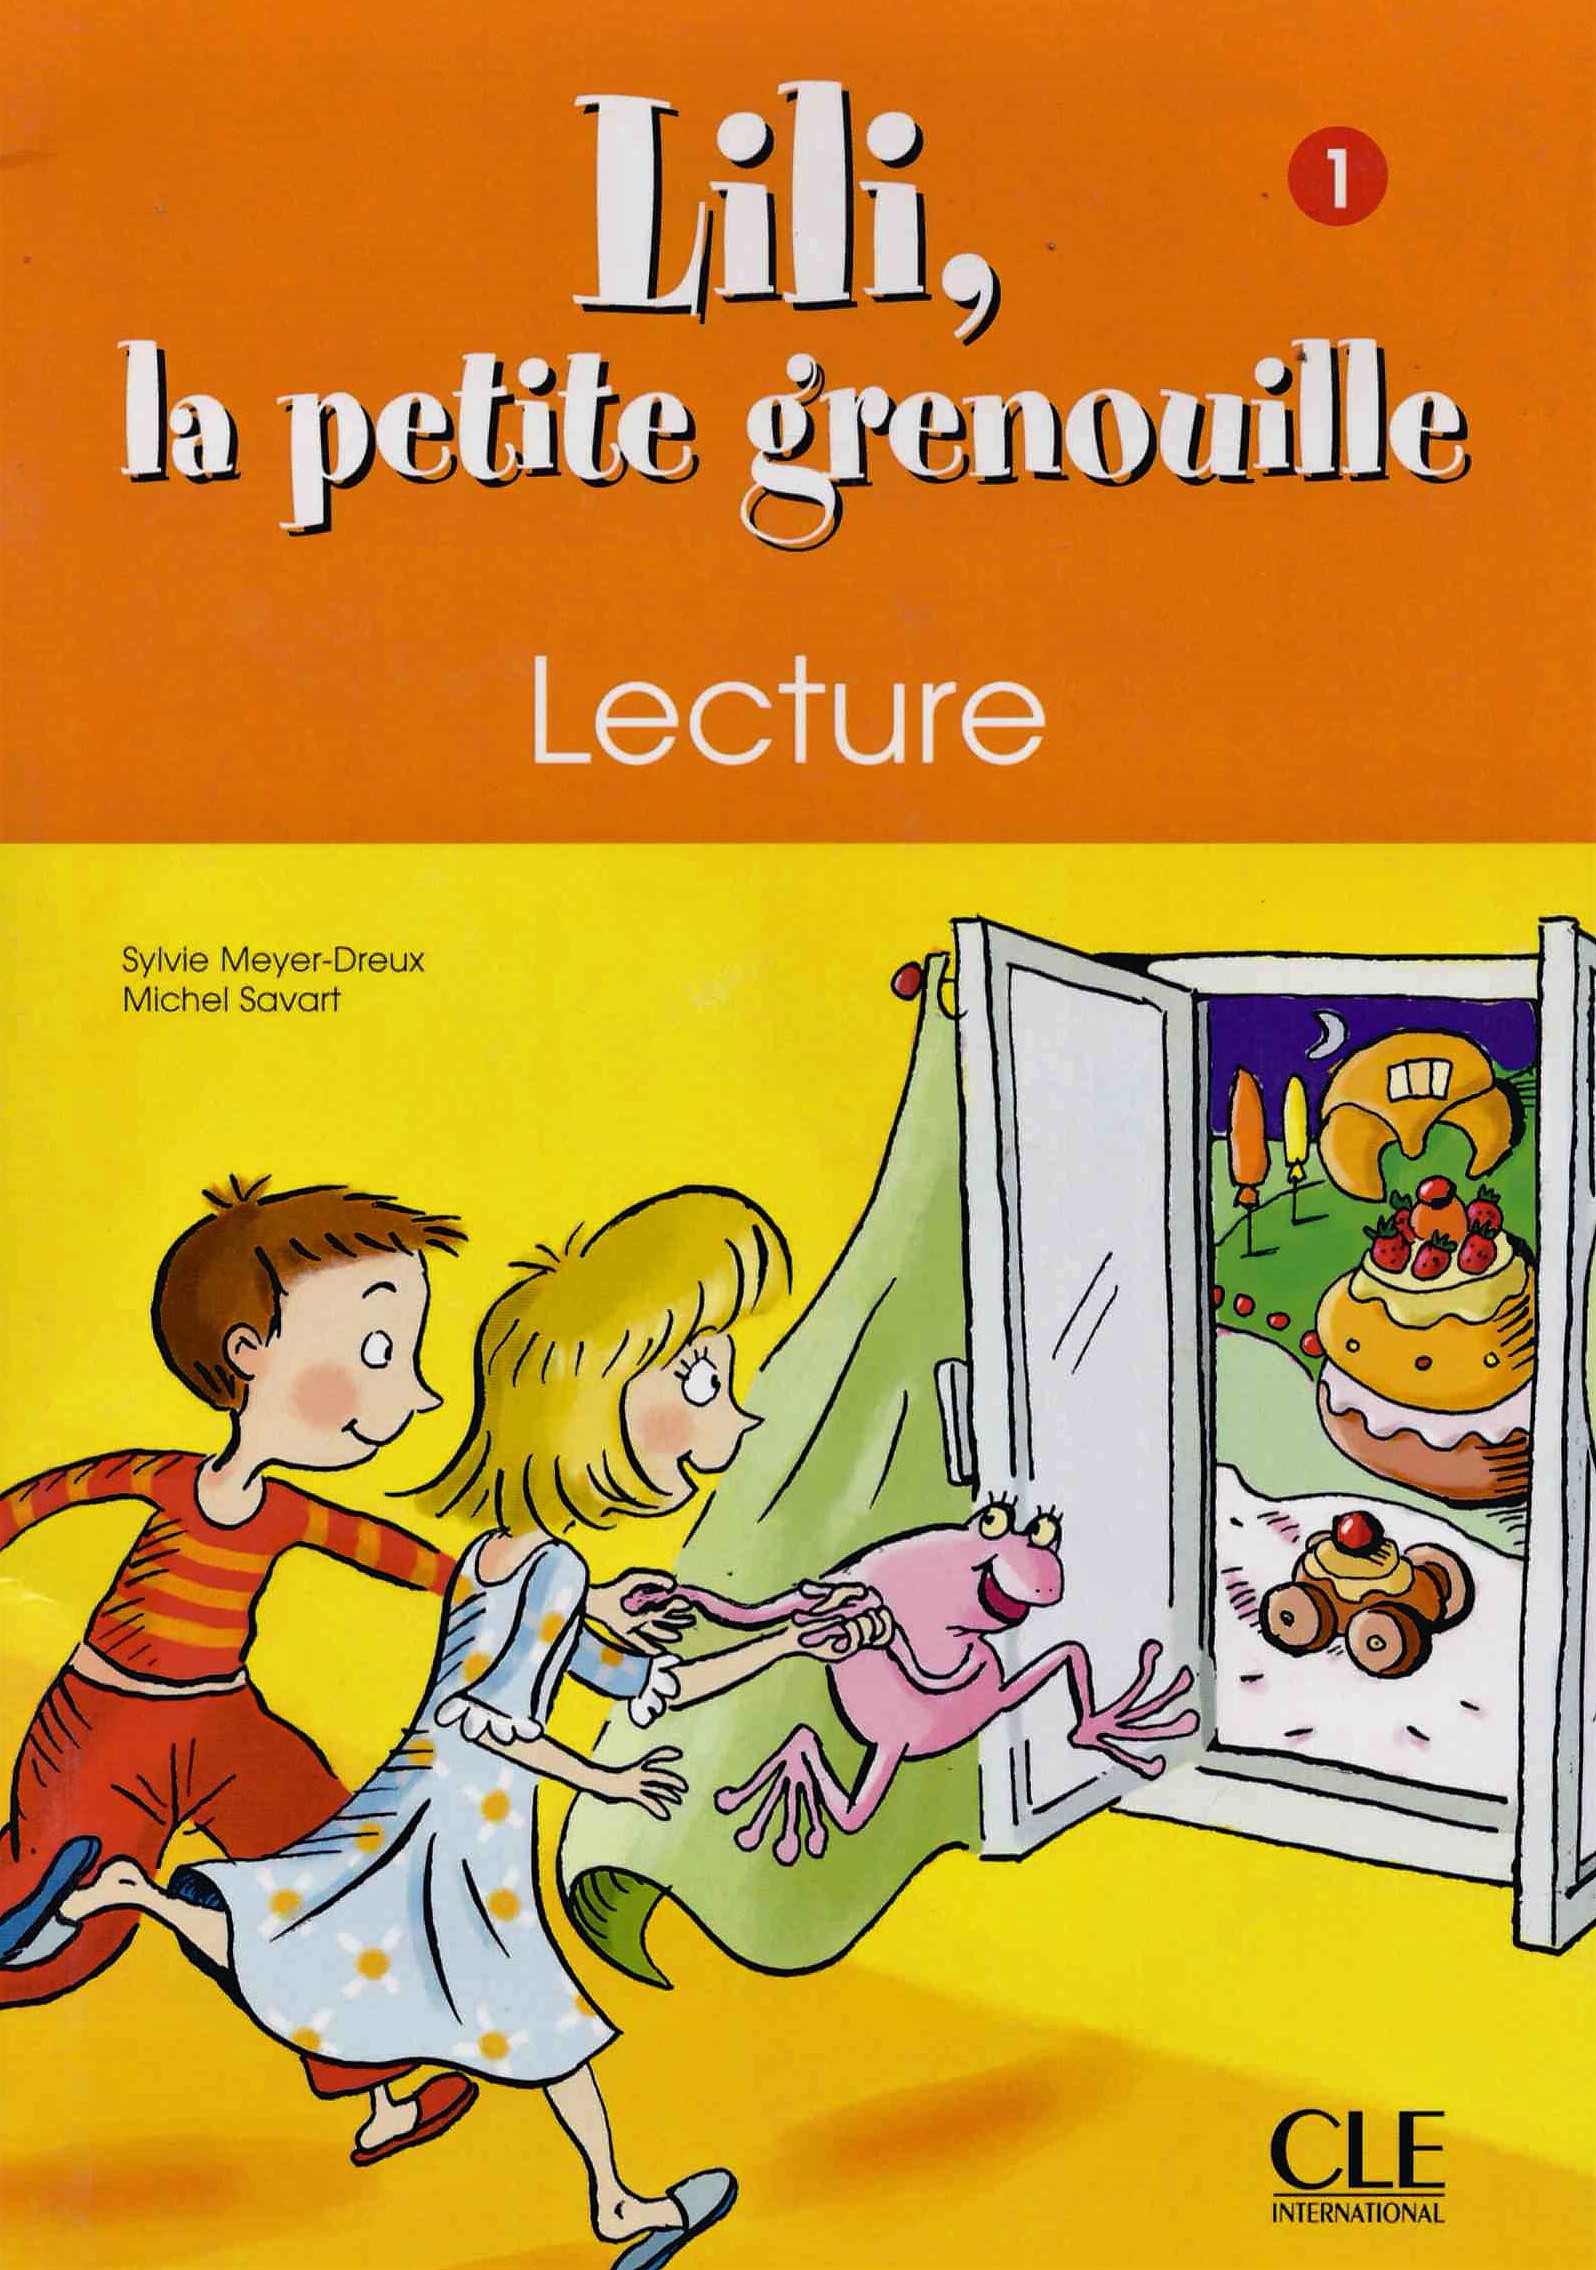 Lili, la petite grenouille 1 Lecture / Книга для обучения чтению